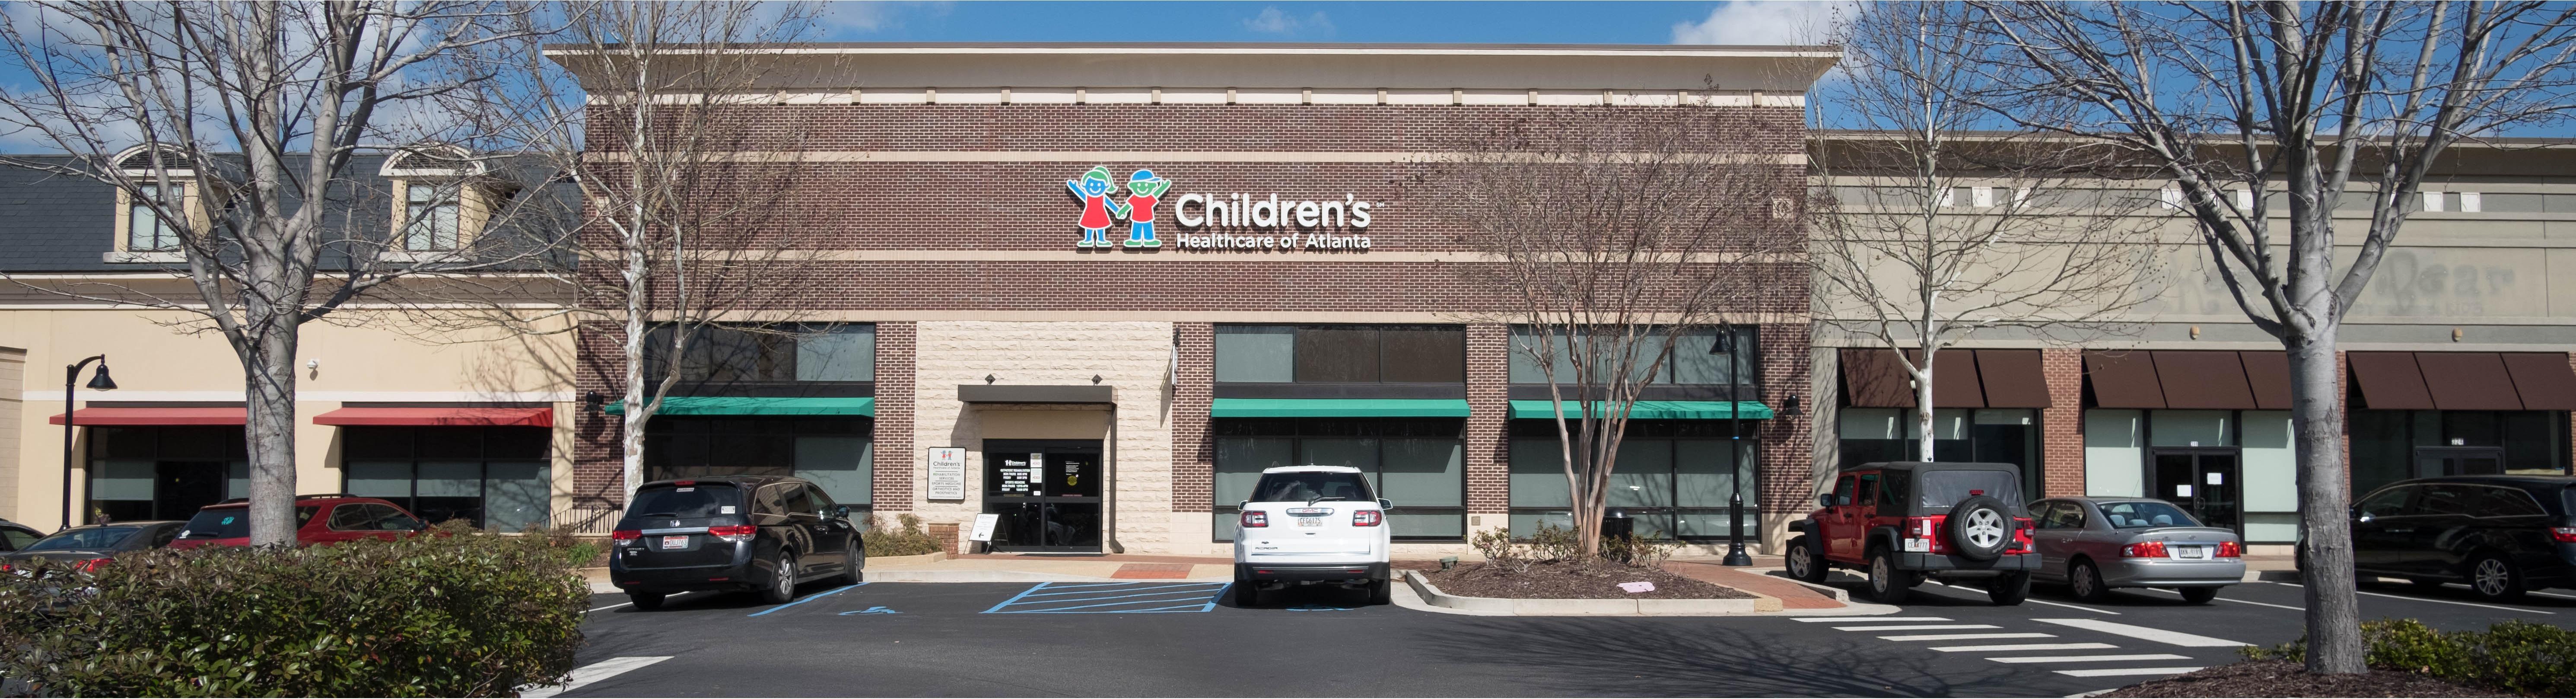 Children's at Forsyth Children's Healthcare of Atlanta Endocrinology - Forsyth Cumming (404)785-5437